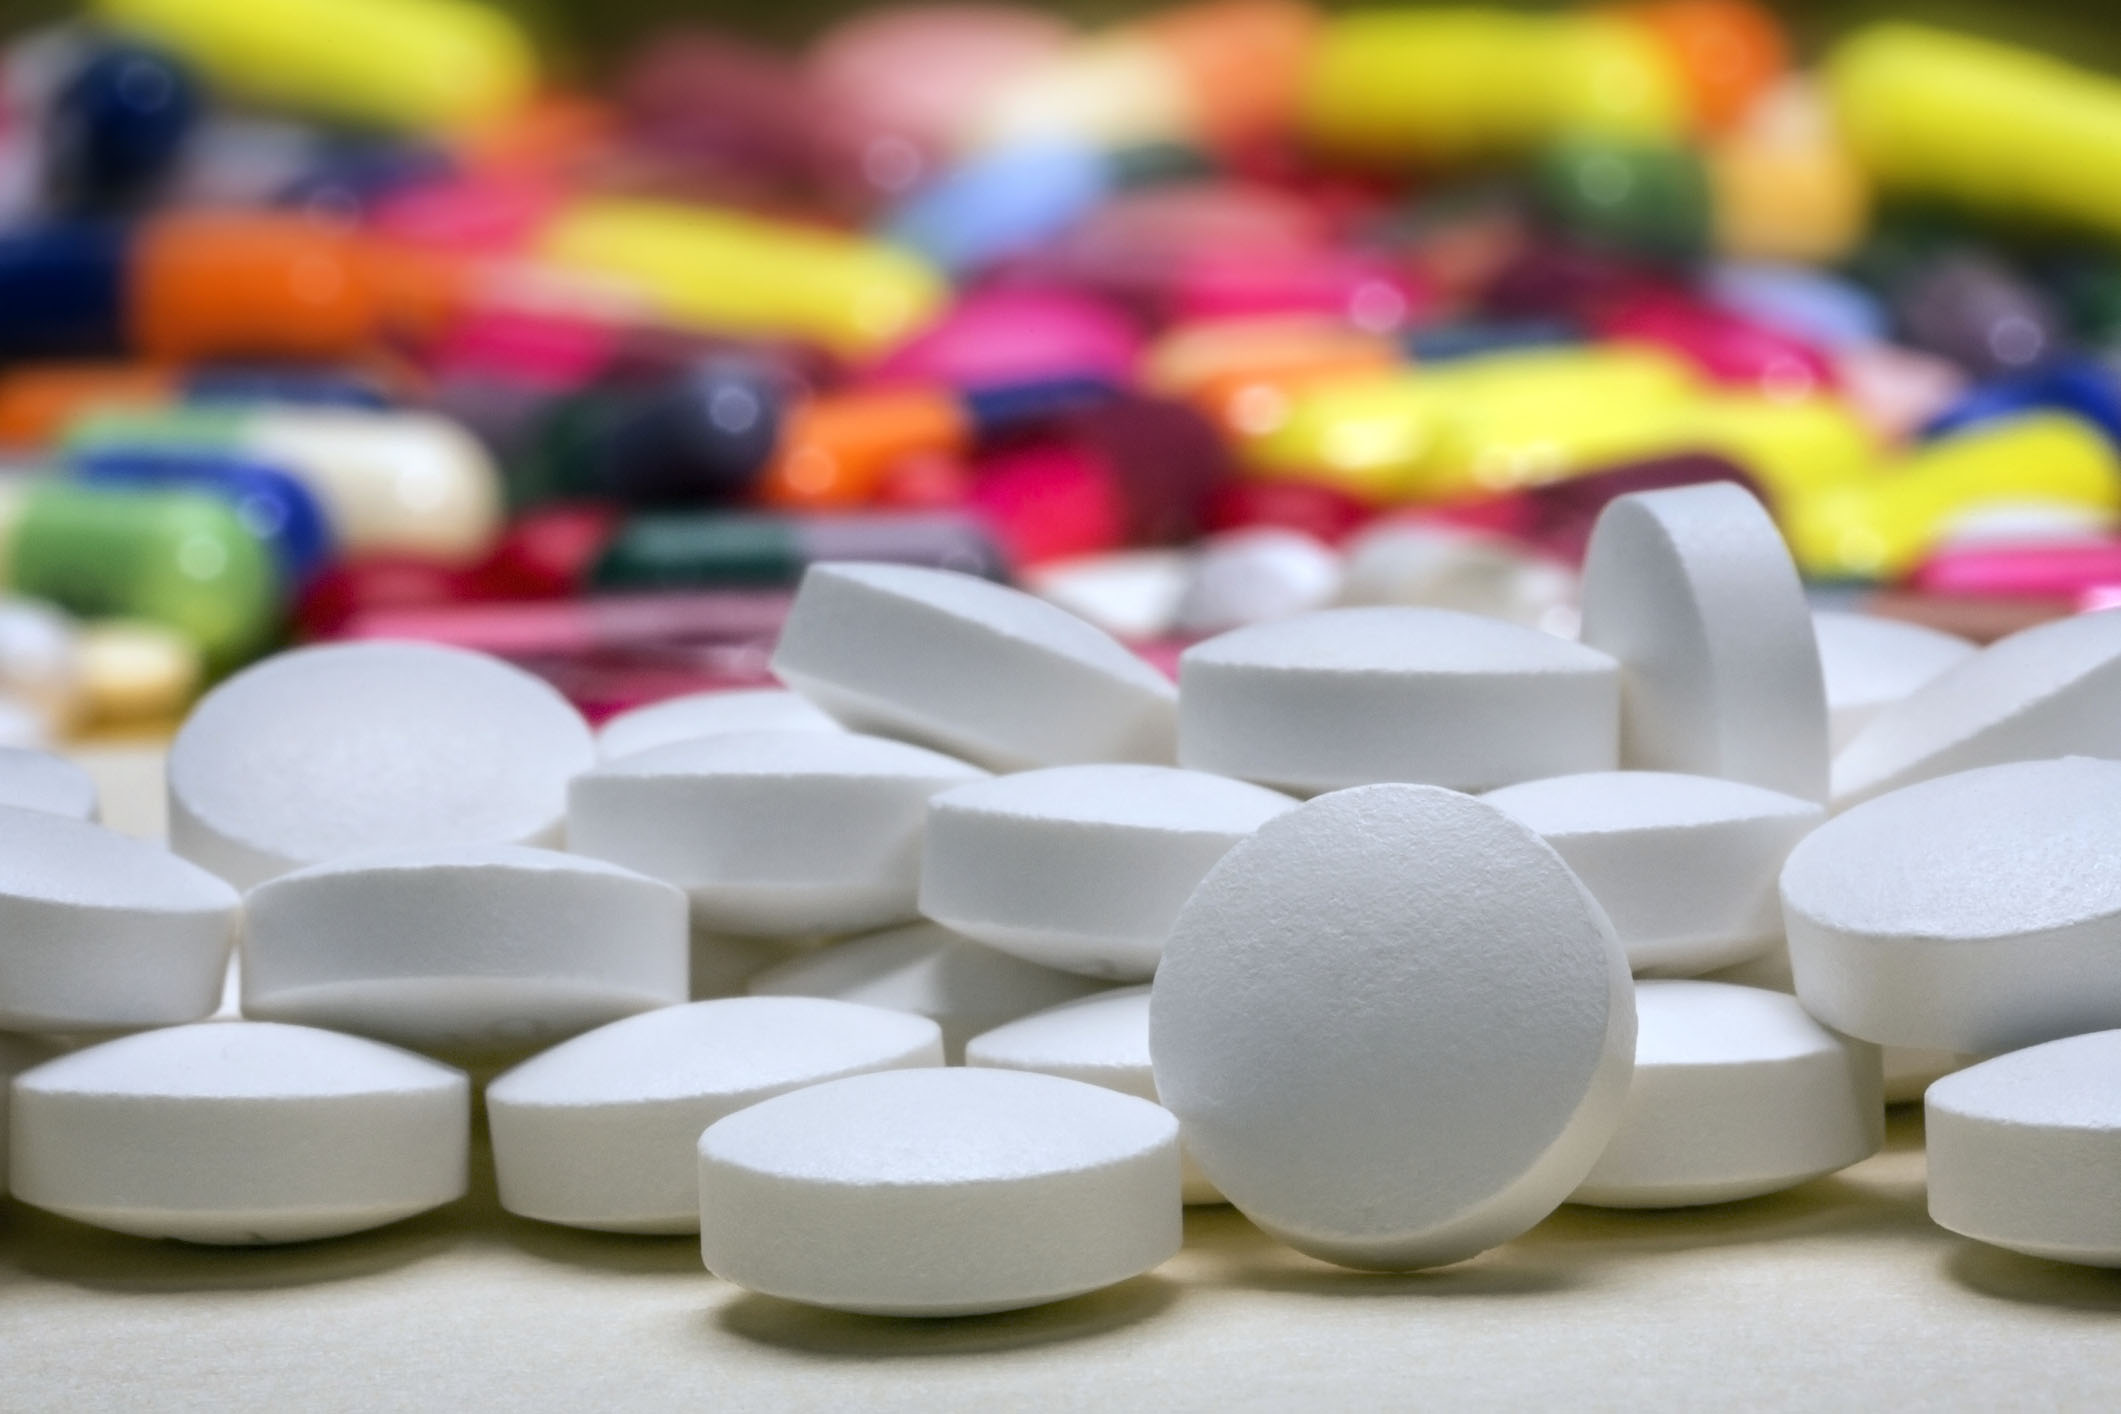 Medicines watchdog seizes over £2m counterfeit medicines in UK drugs bust